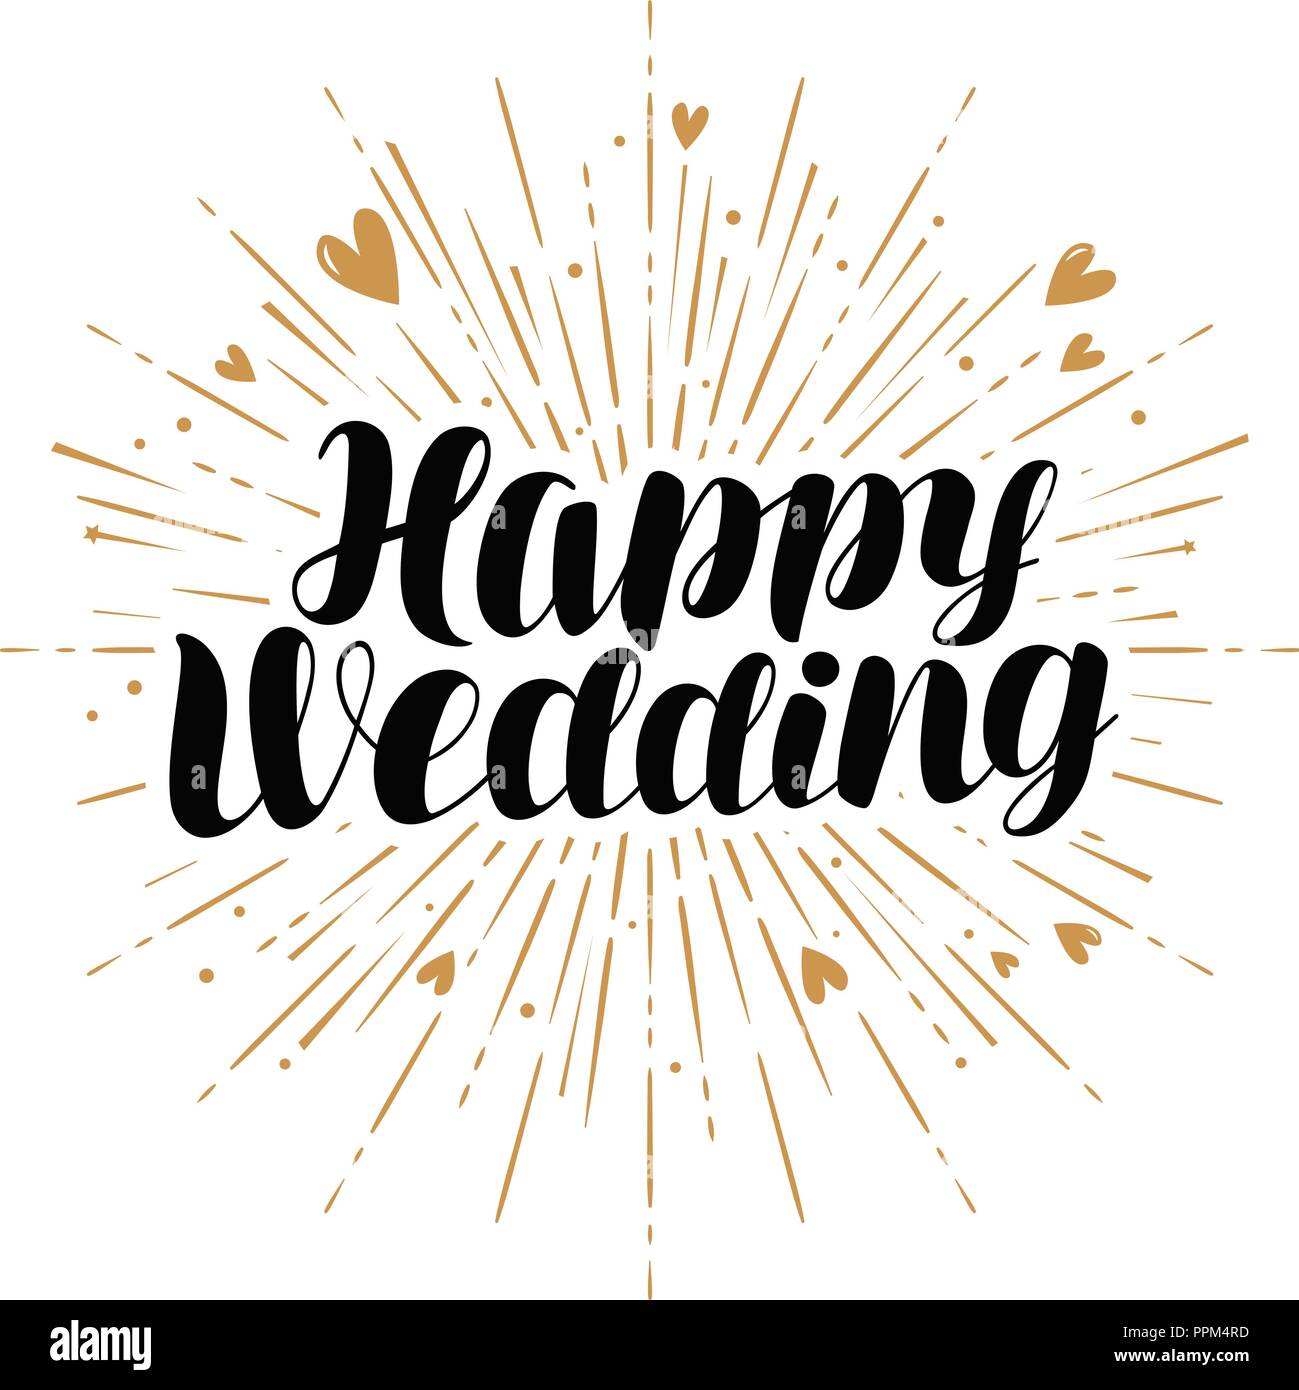 Happy wedding, greeting card. Marriage, marry banner. Handwritten lettering vector Stock Vector